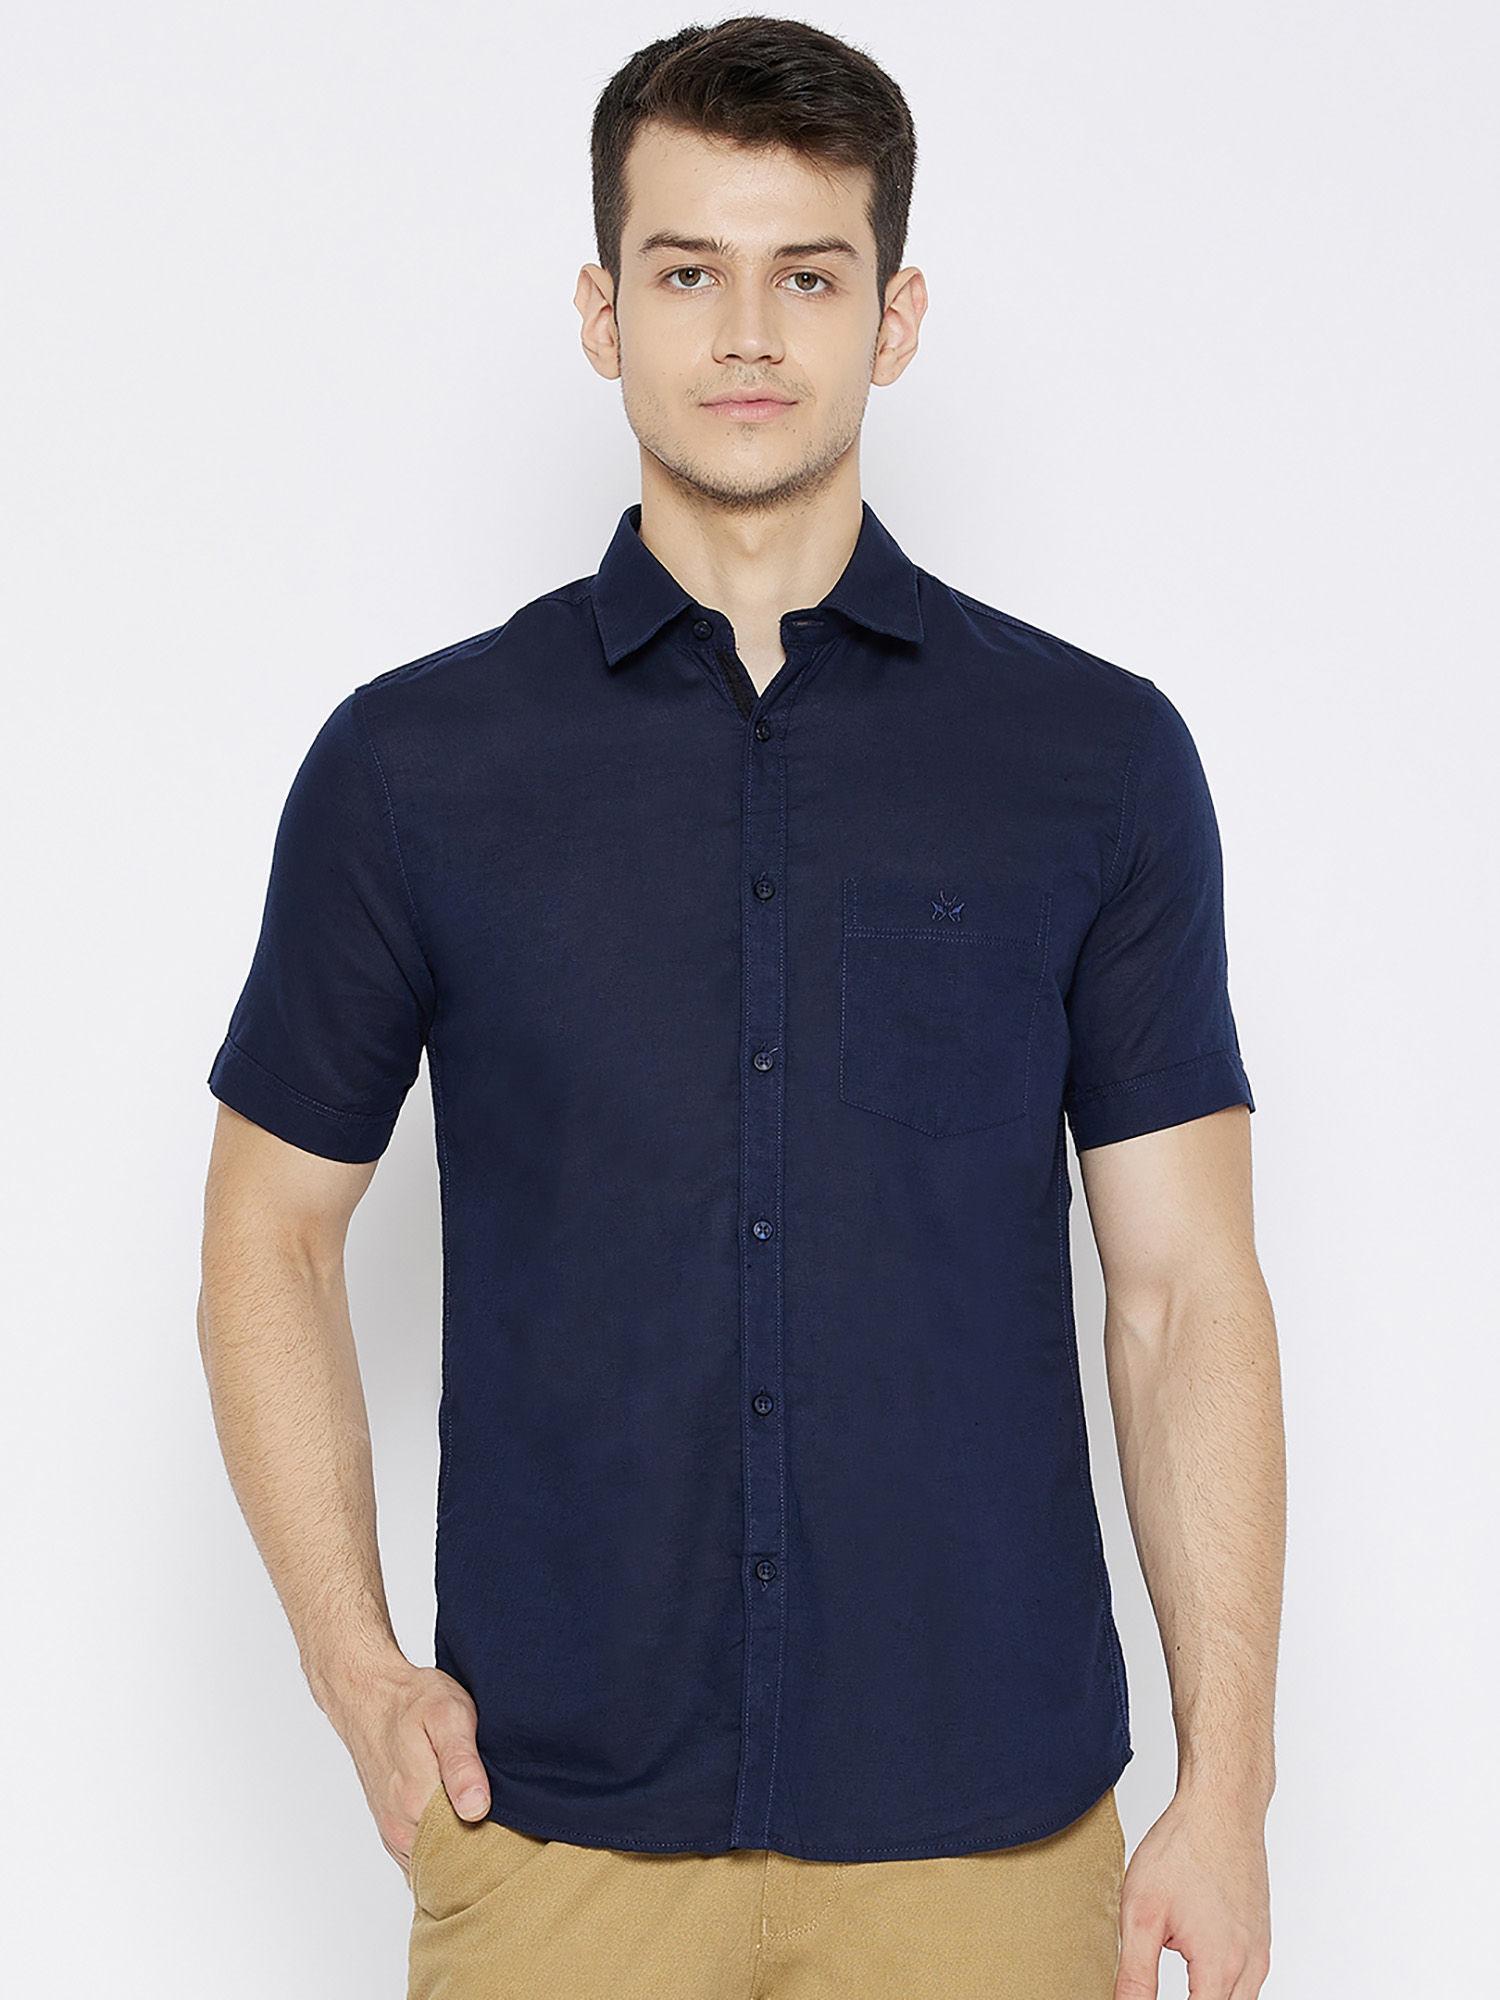 mens-navy-blue-solid-shirt